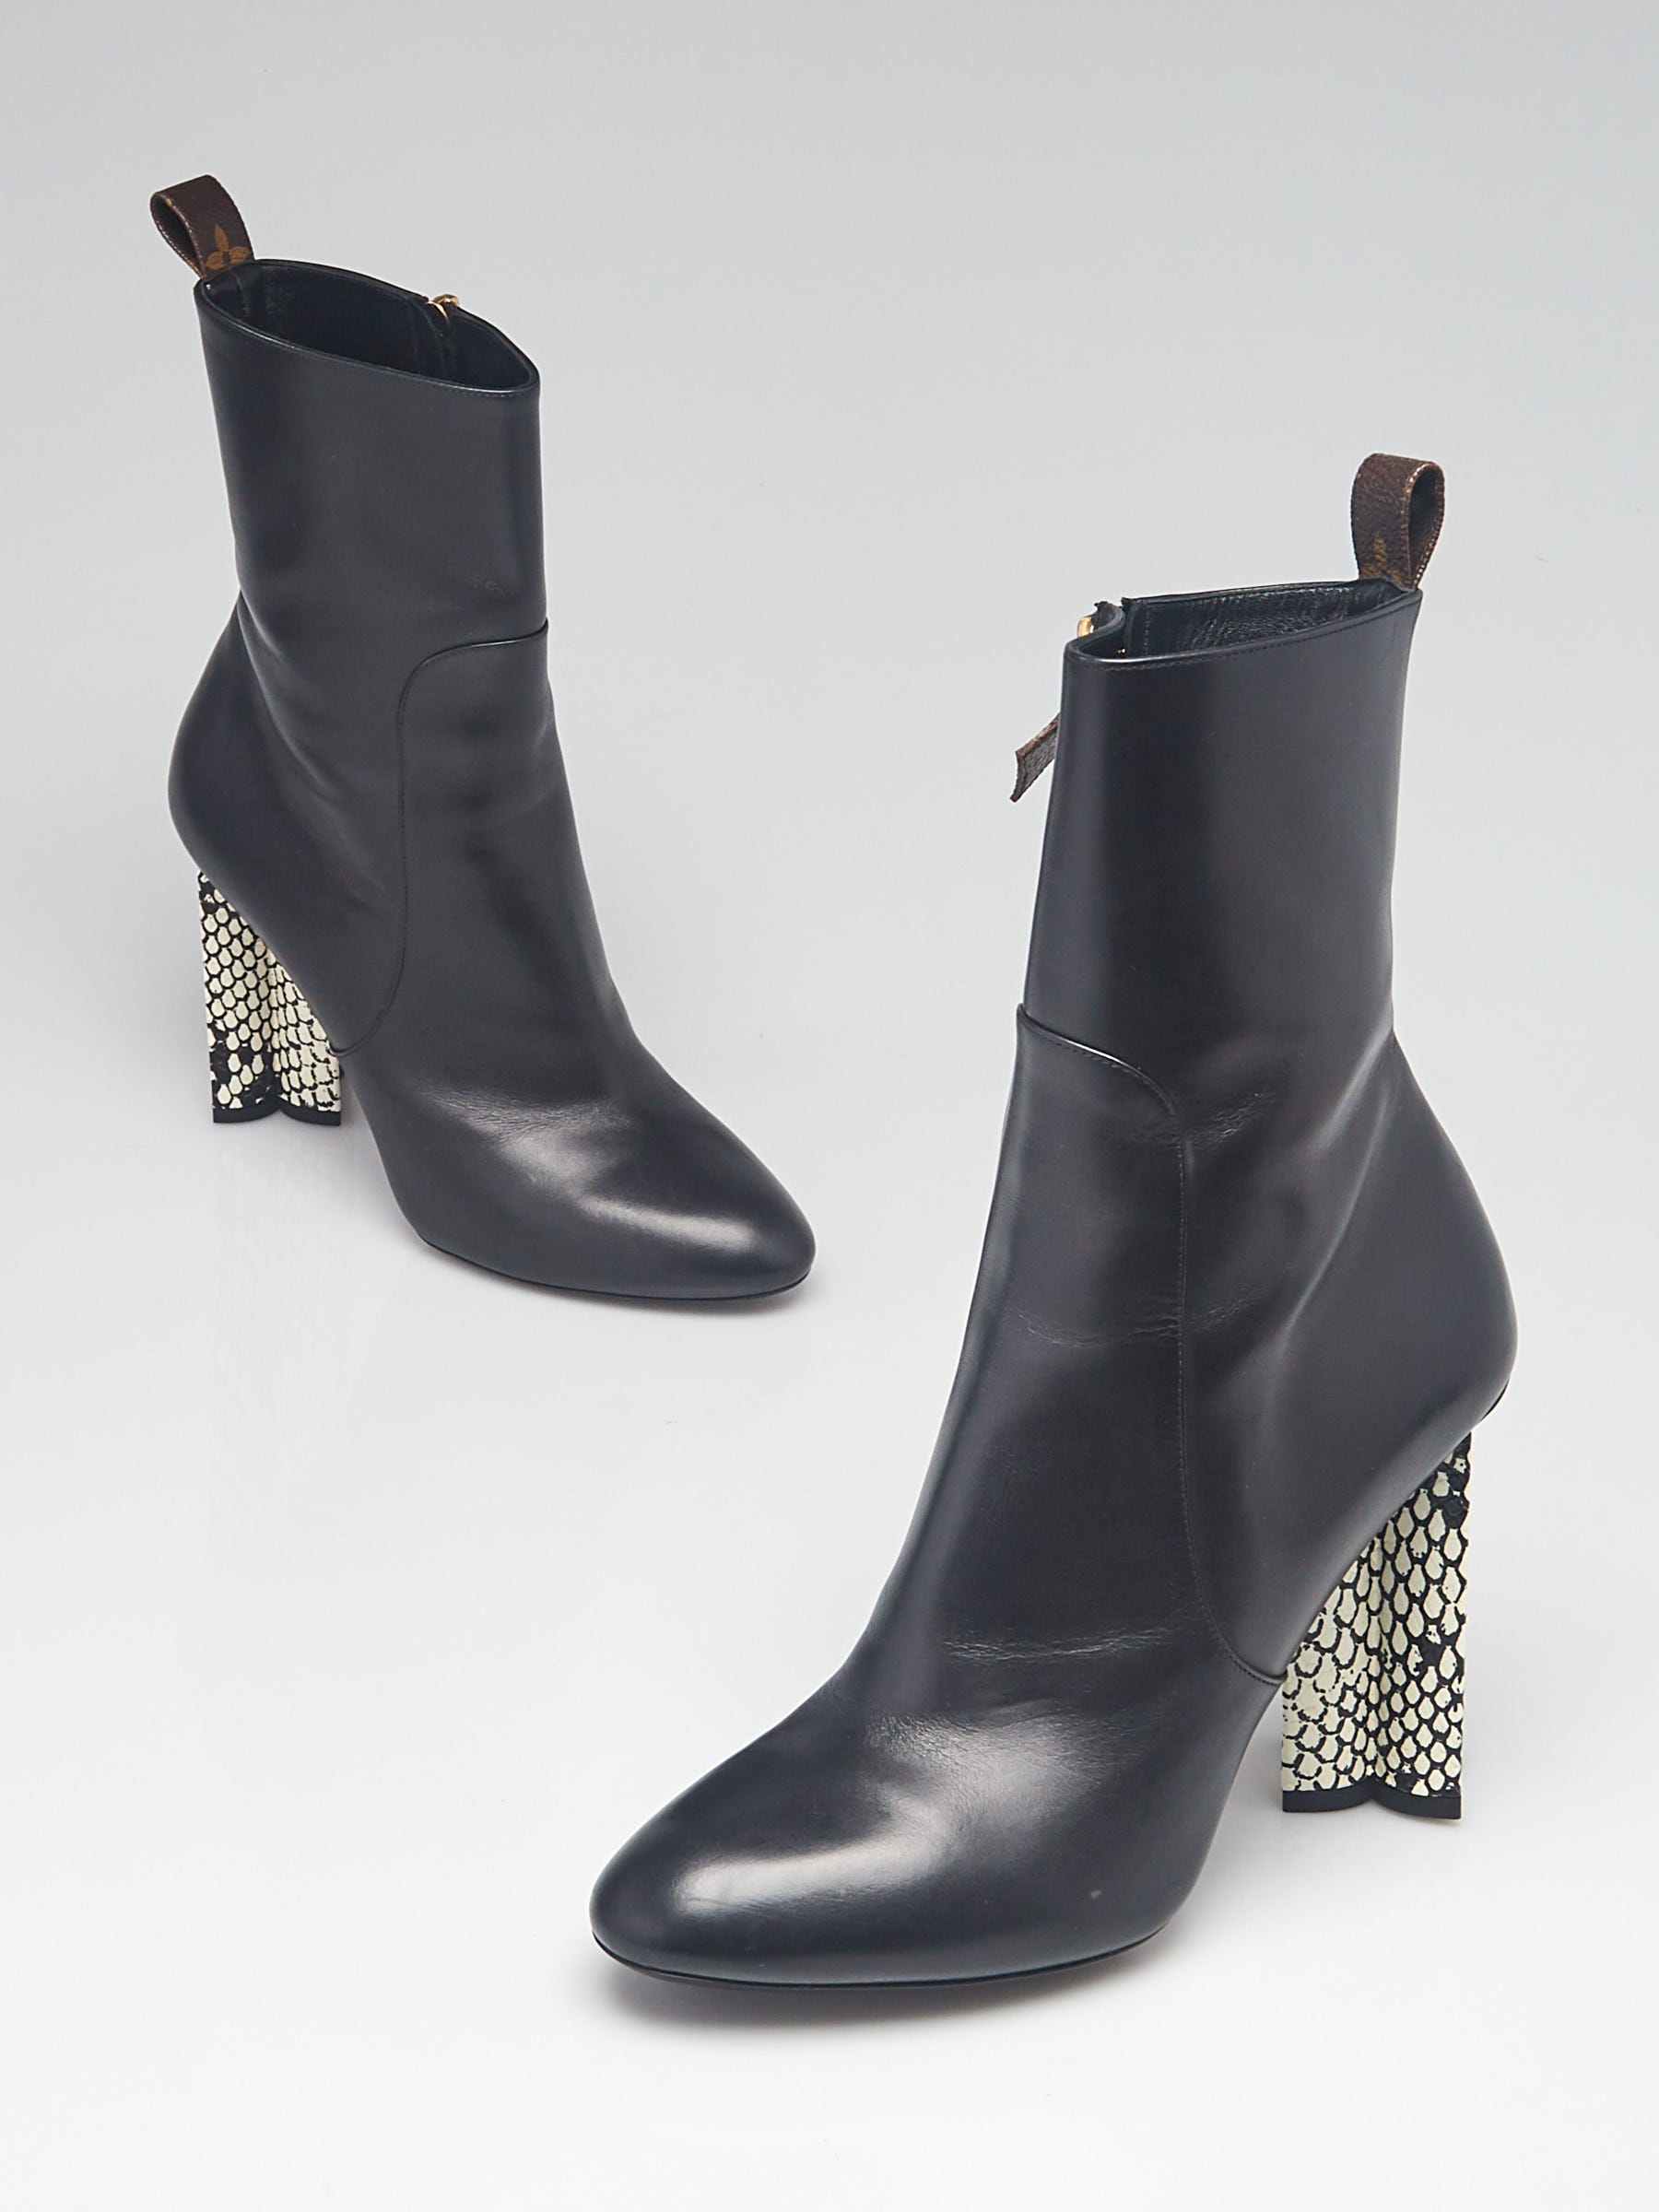 Louis Vuitton Women's Silhouette Ankle Boots